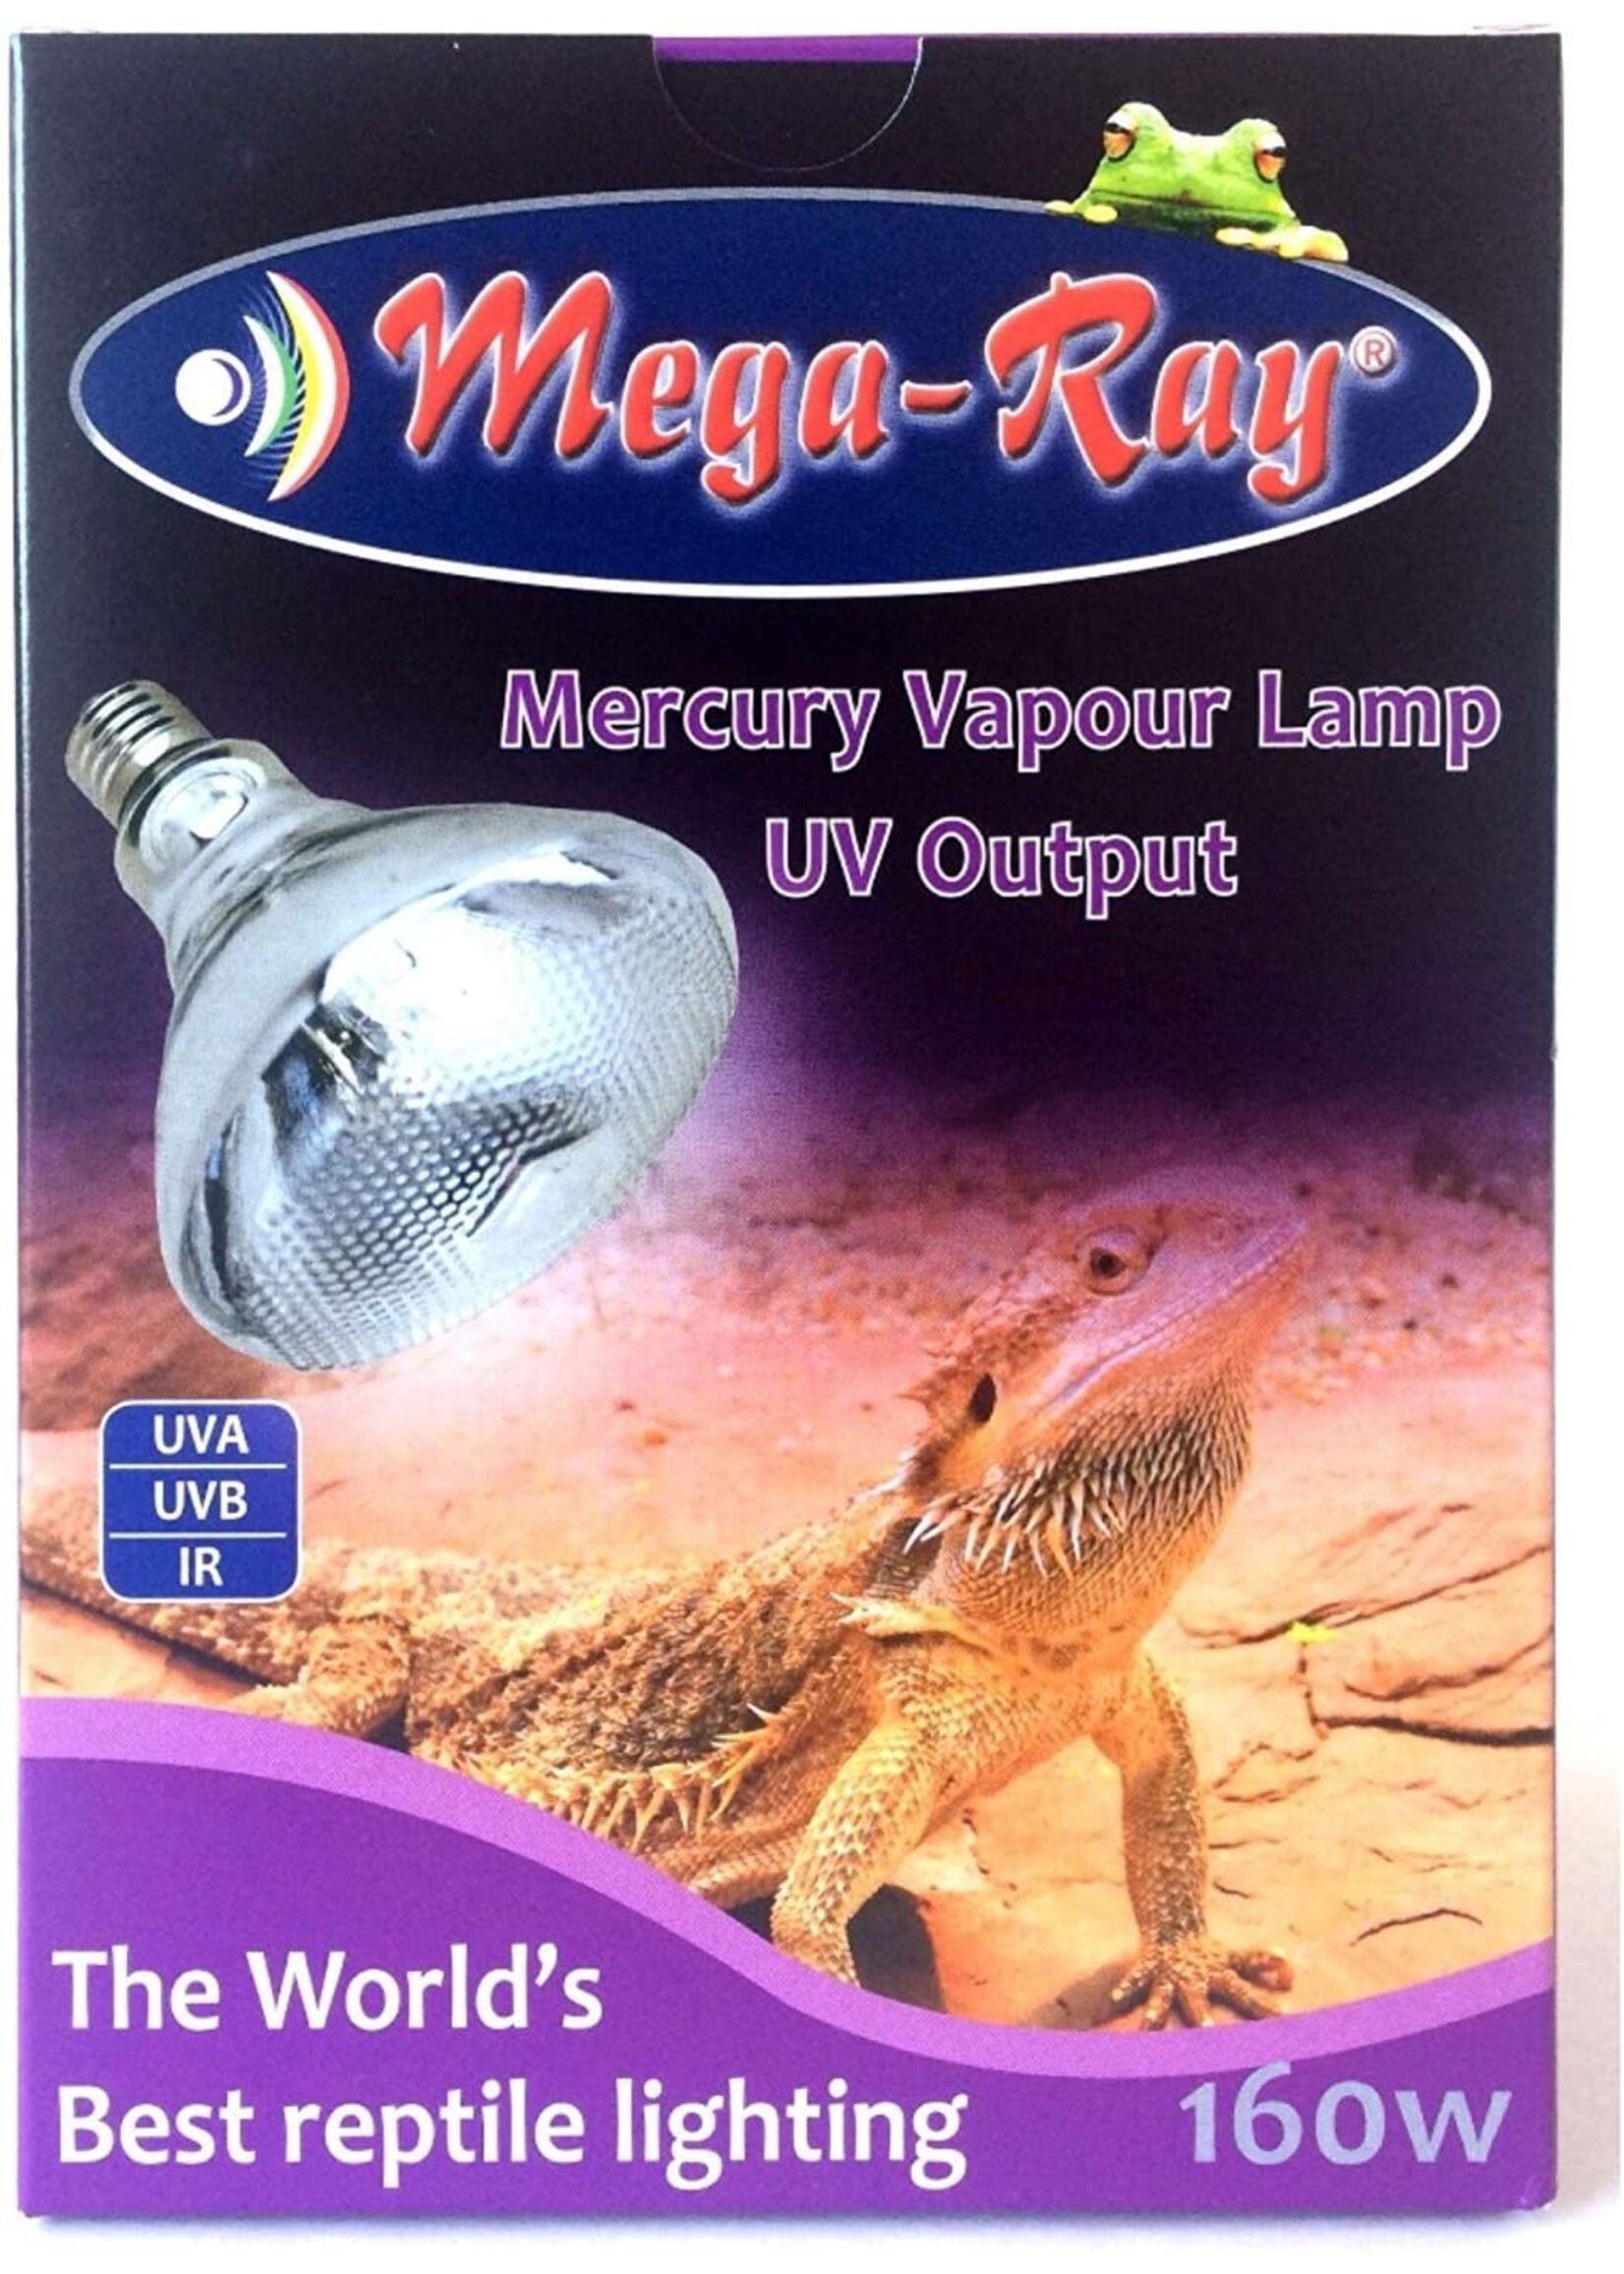 Mega-Ray Mercury Vapour Lamp UV Output